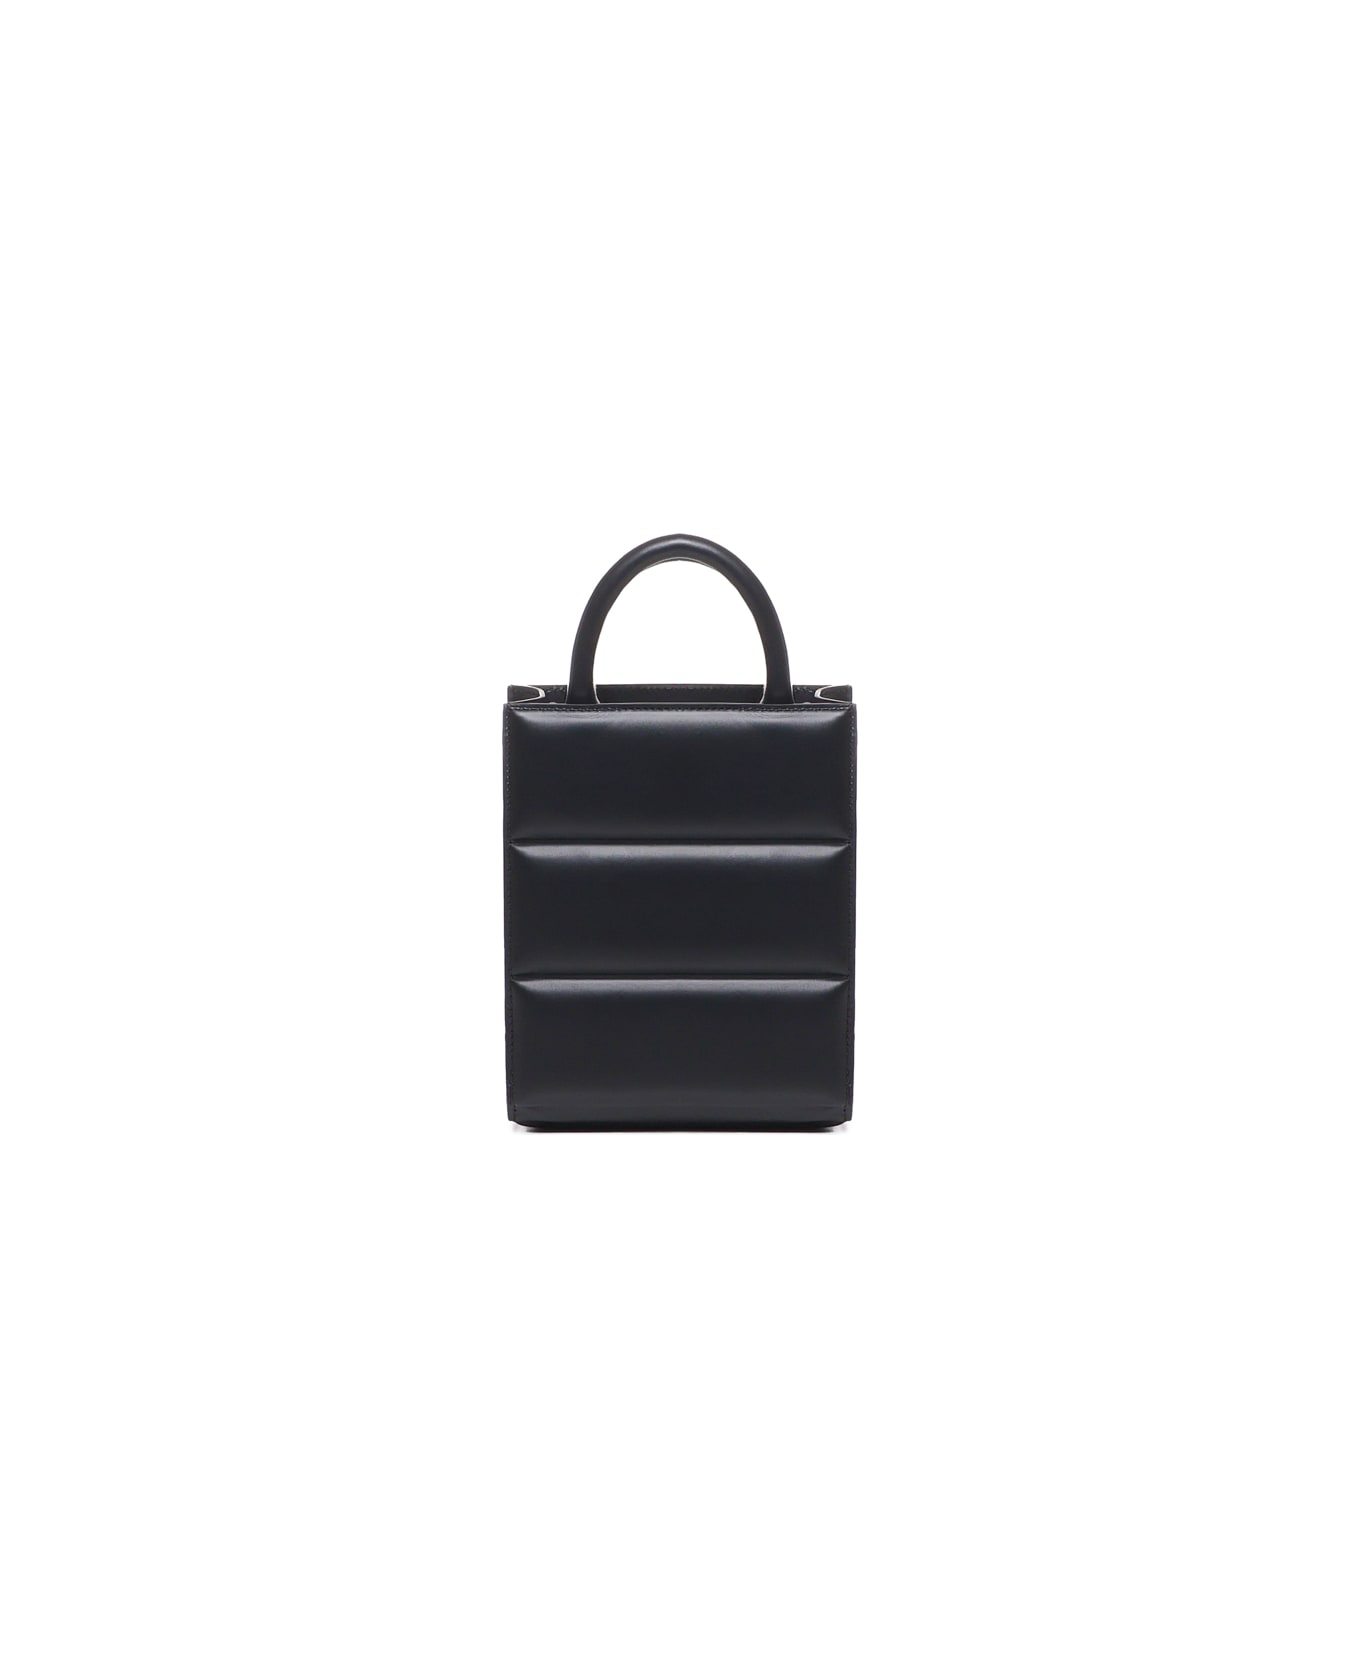 Moncler Leather Doudoune Mini Tote Bag - Nero トートバッグ